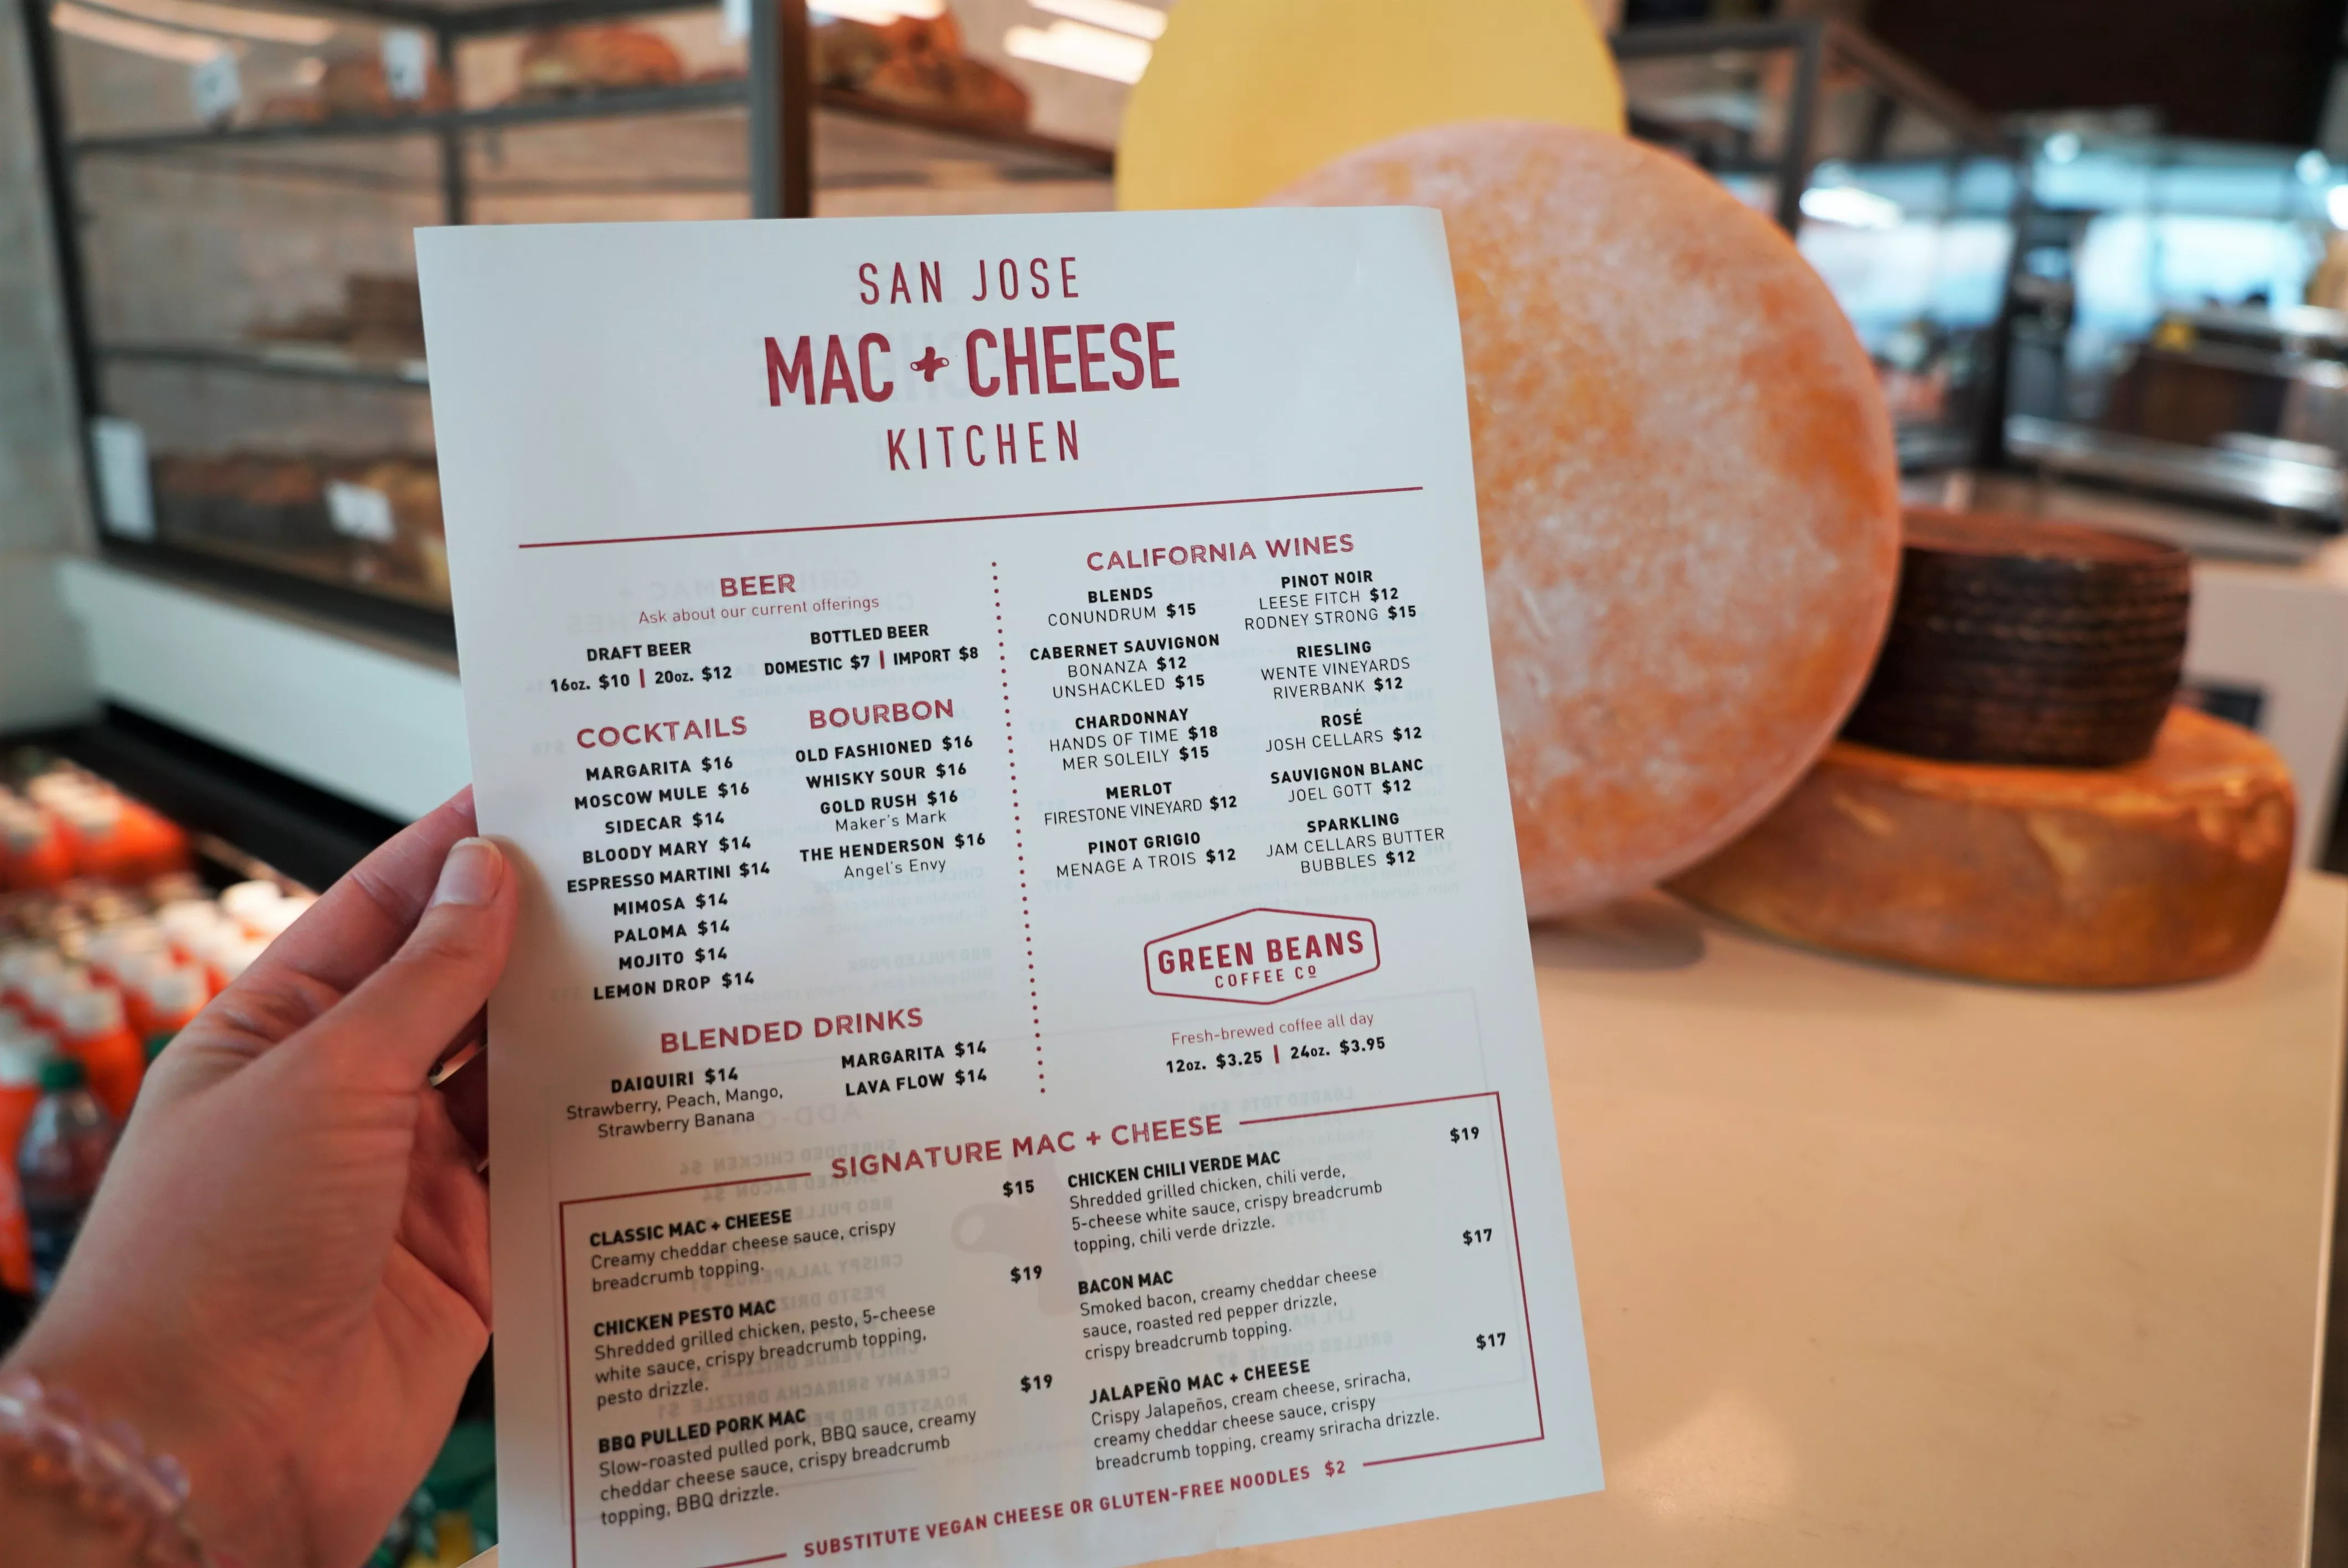 Mac + Cheese Grand Opening Celebration